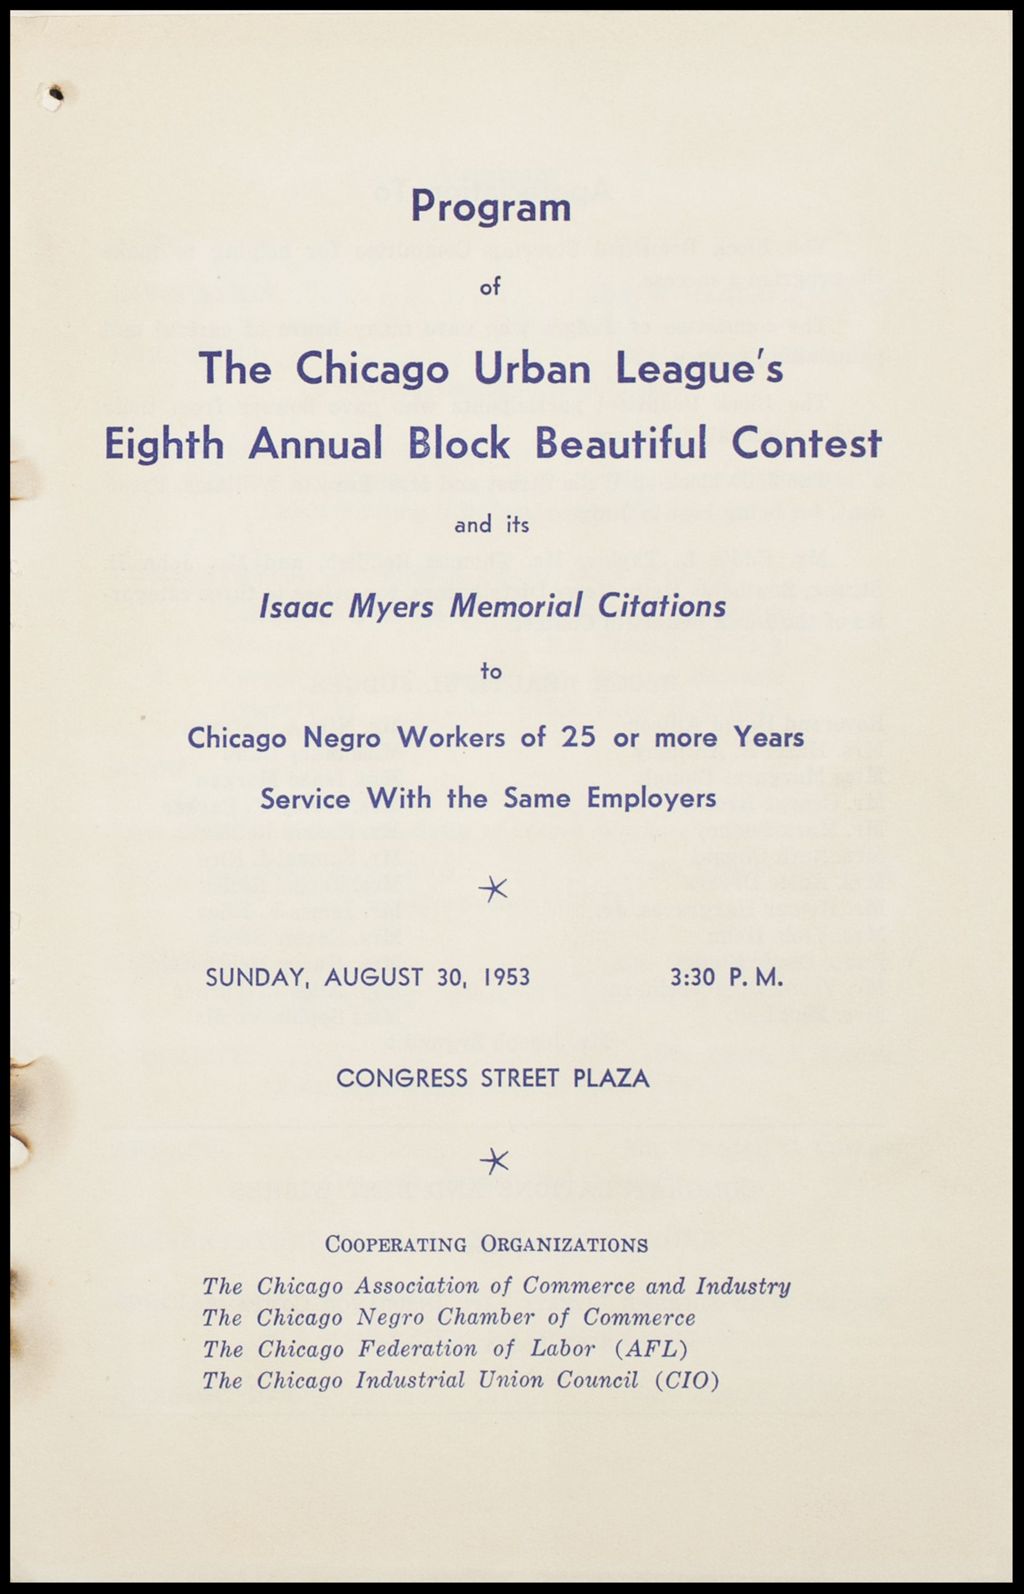 Miniature of Block Beautiful Contest Program, 1949-1954 (Folder II-2286)